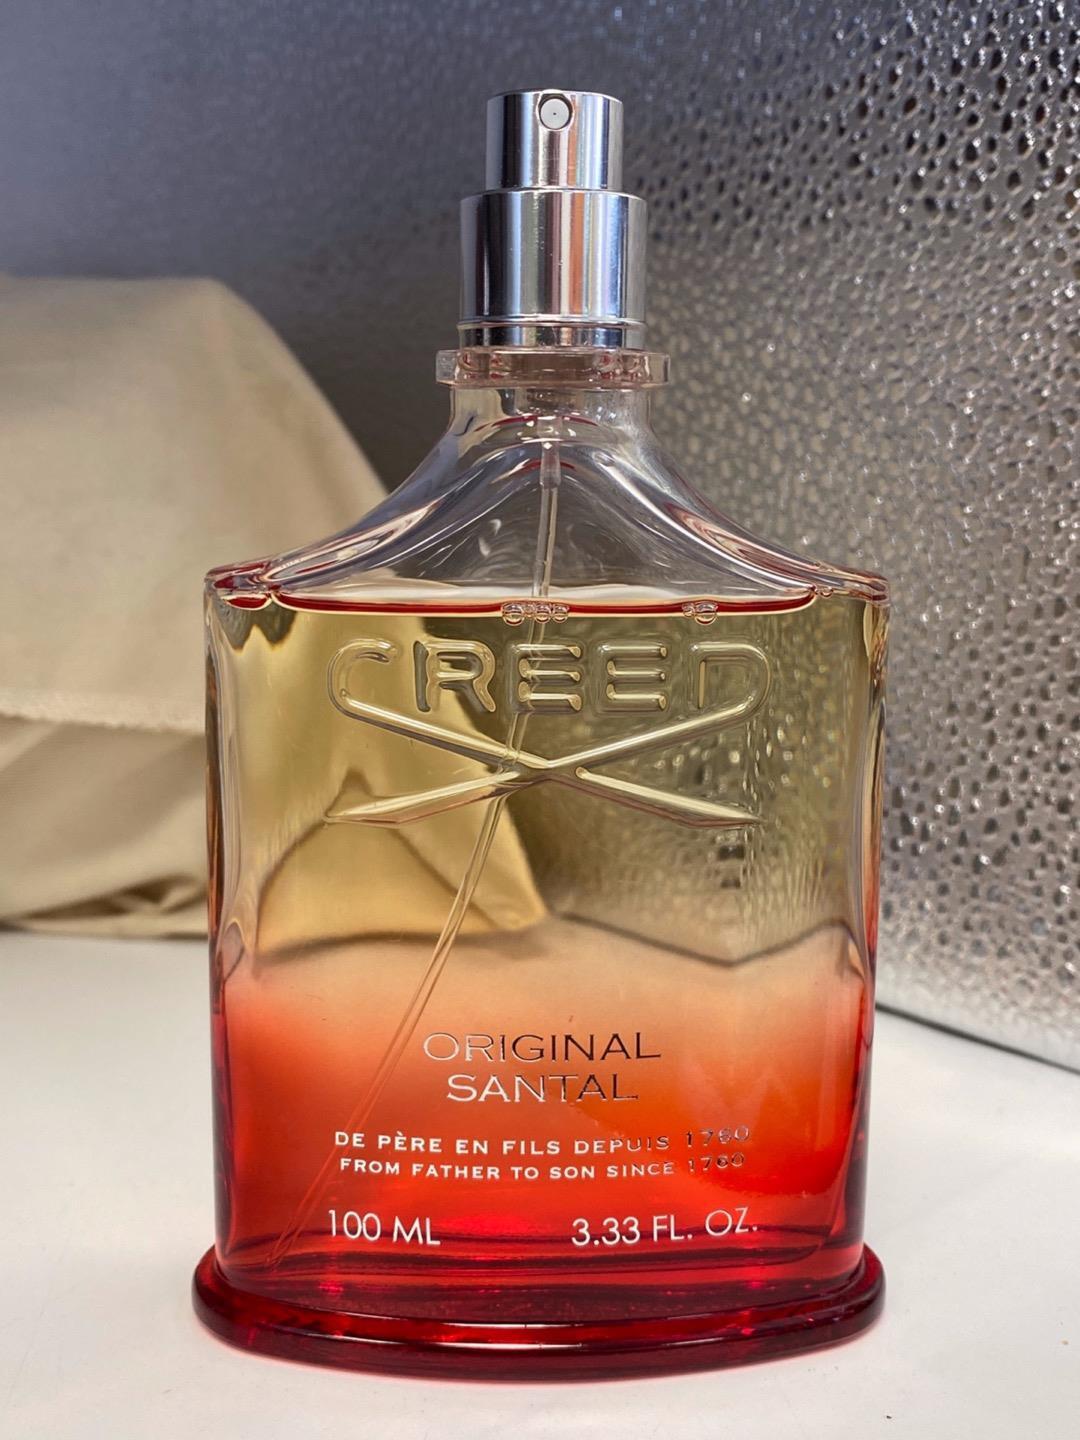 Genuine Creed Original Santal Eau de Parfum Tester 100ml mostly full bottle